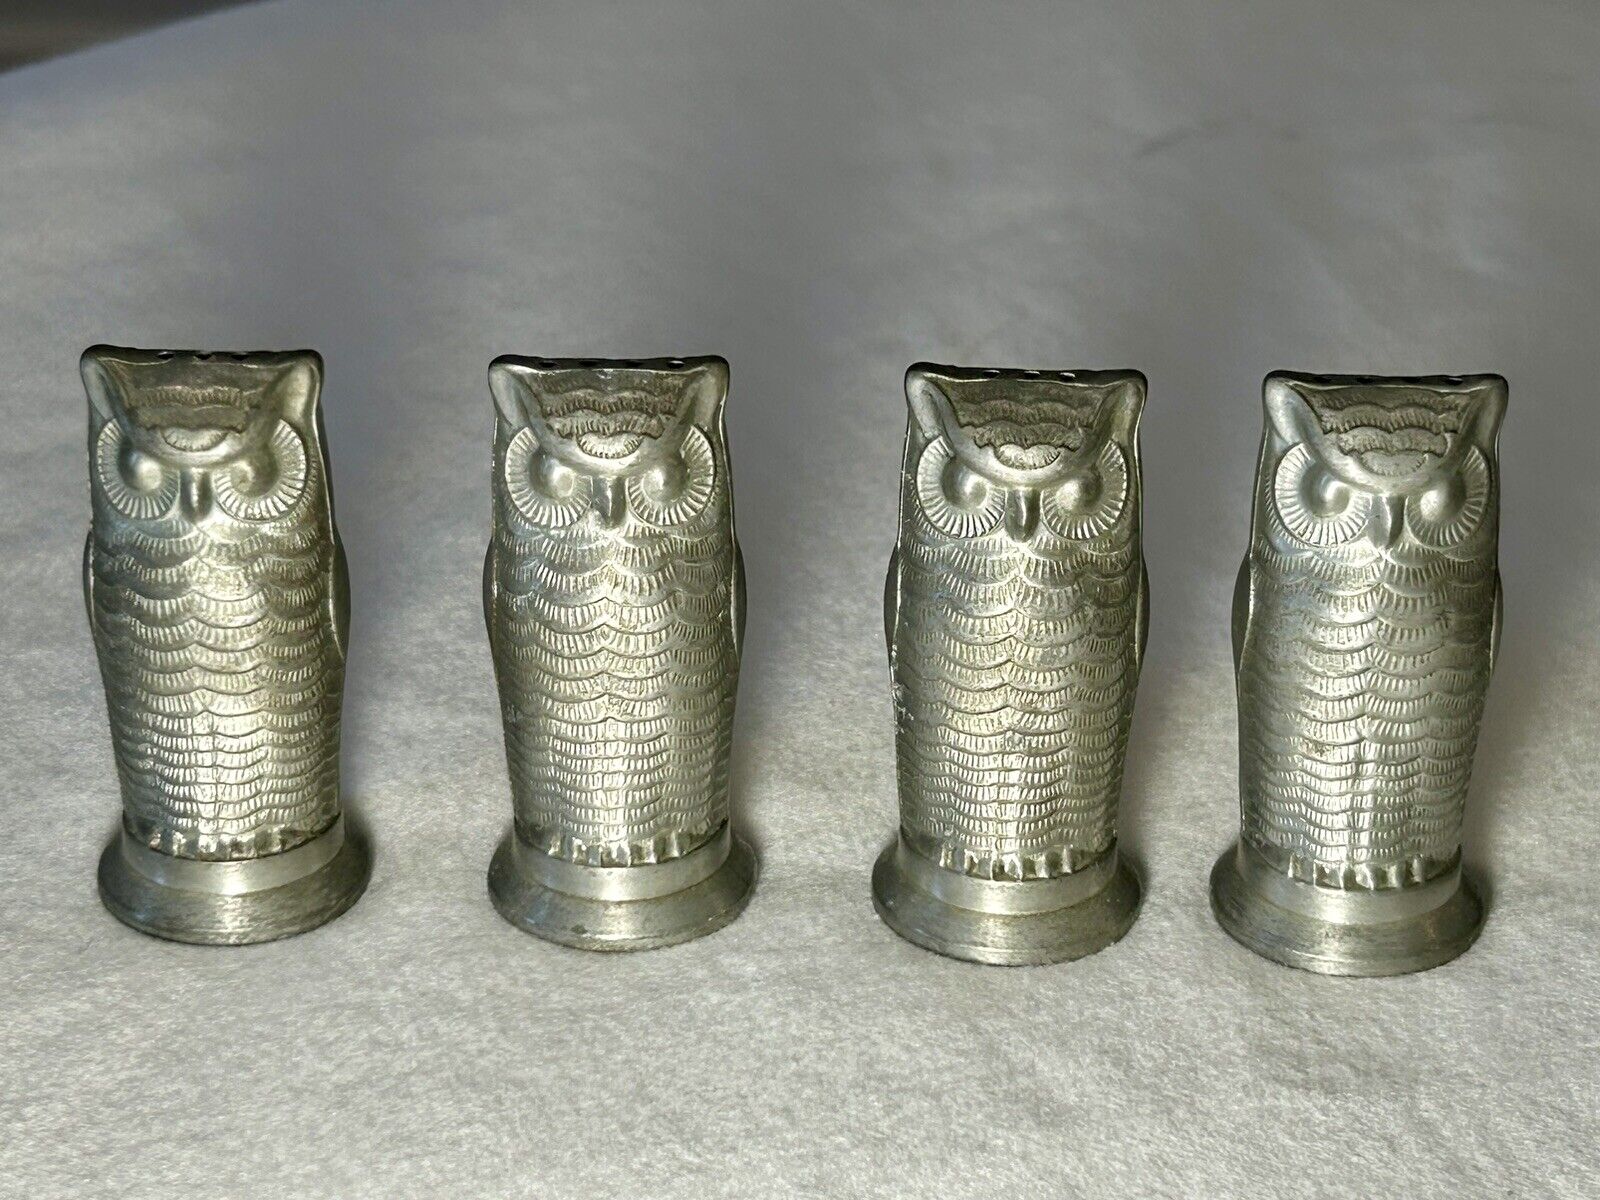 RARE GORHAM FIGURAL OWLS~4 OWL SALT&PEPPER SHAKERS~DAVID ANDERSEN DESIGN